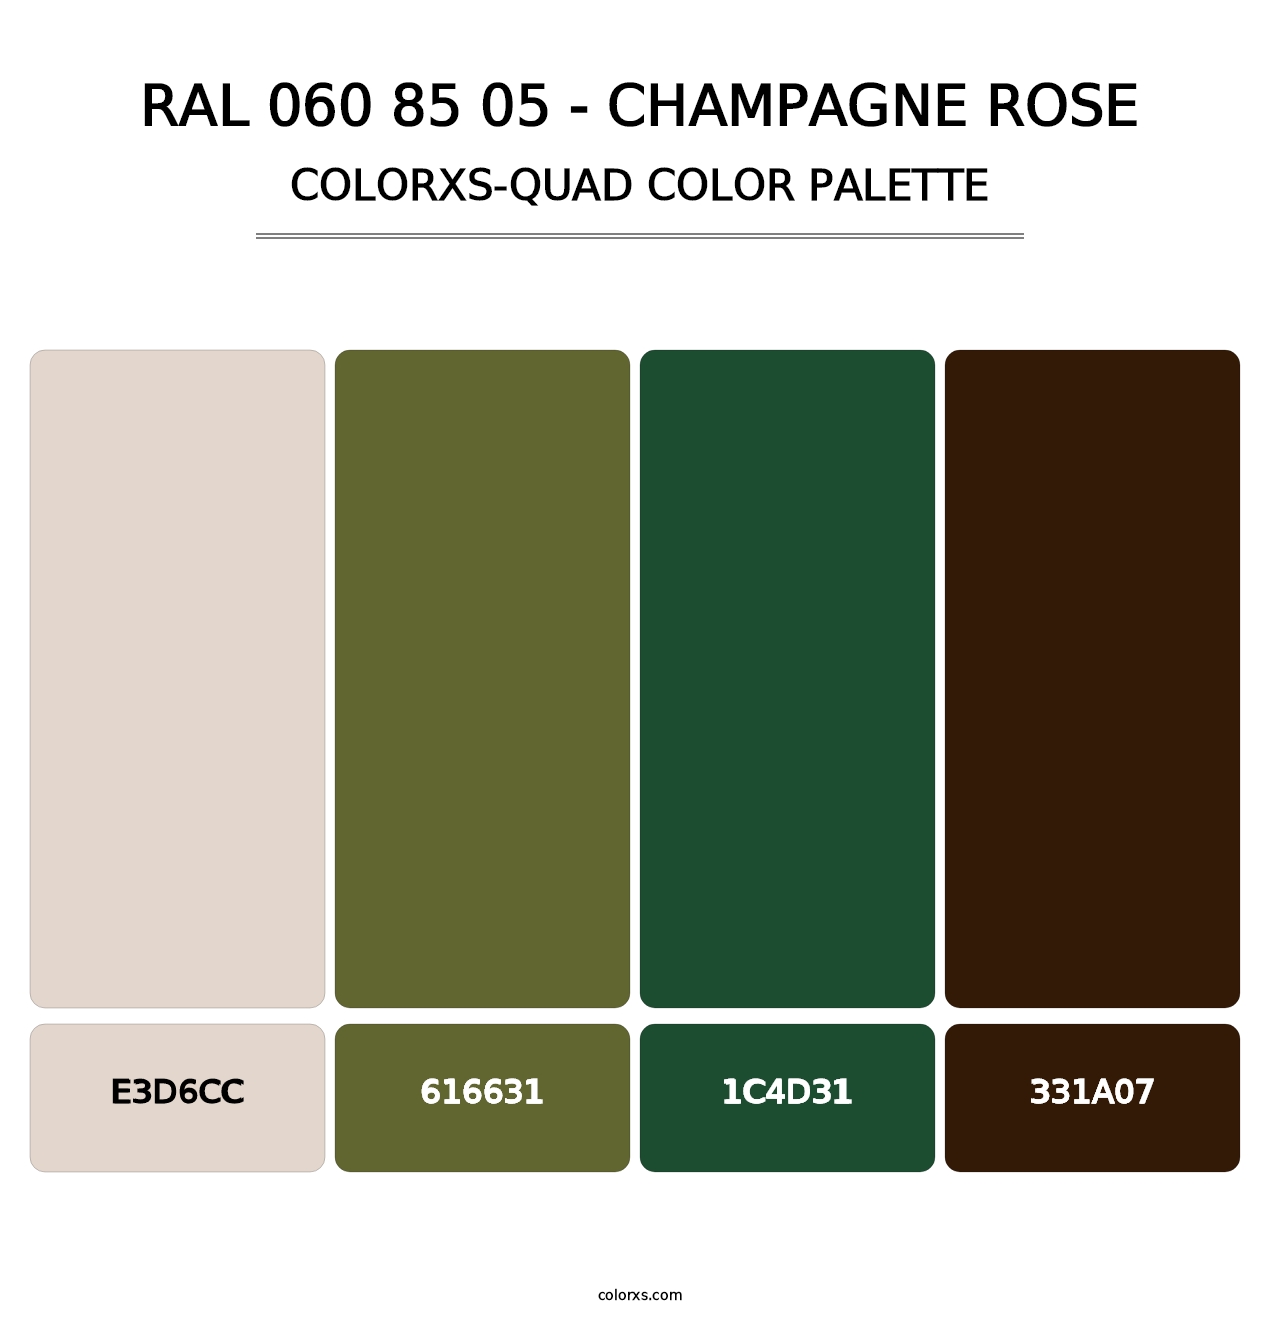 RAL 060 85 05 - Champagne Rose - Colorxs Quad Palette